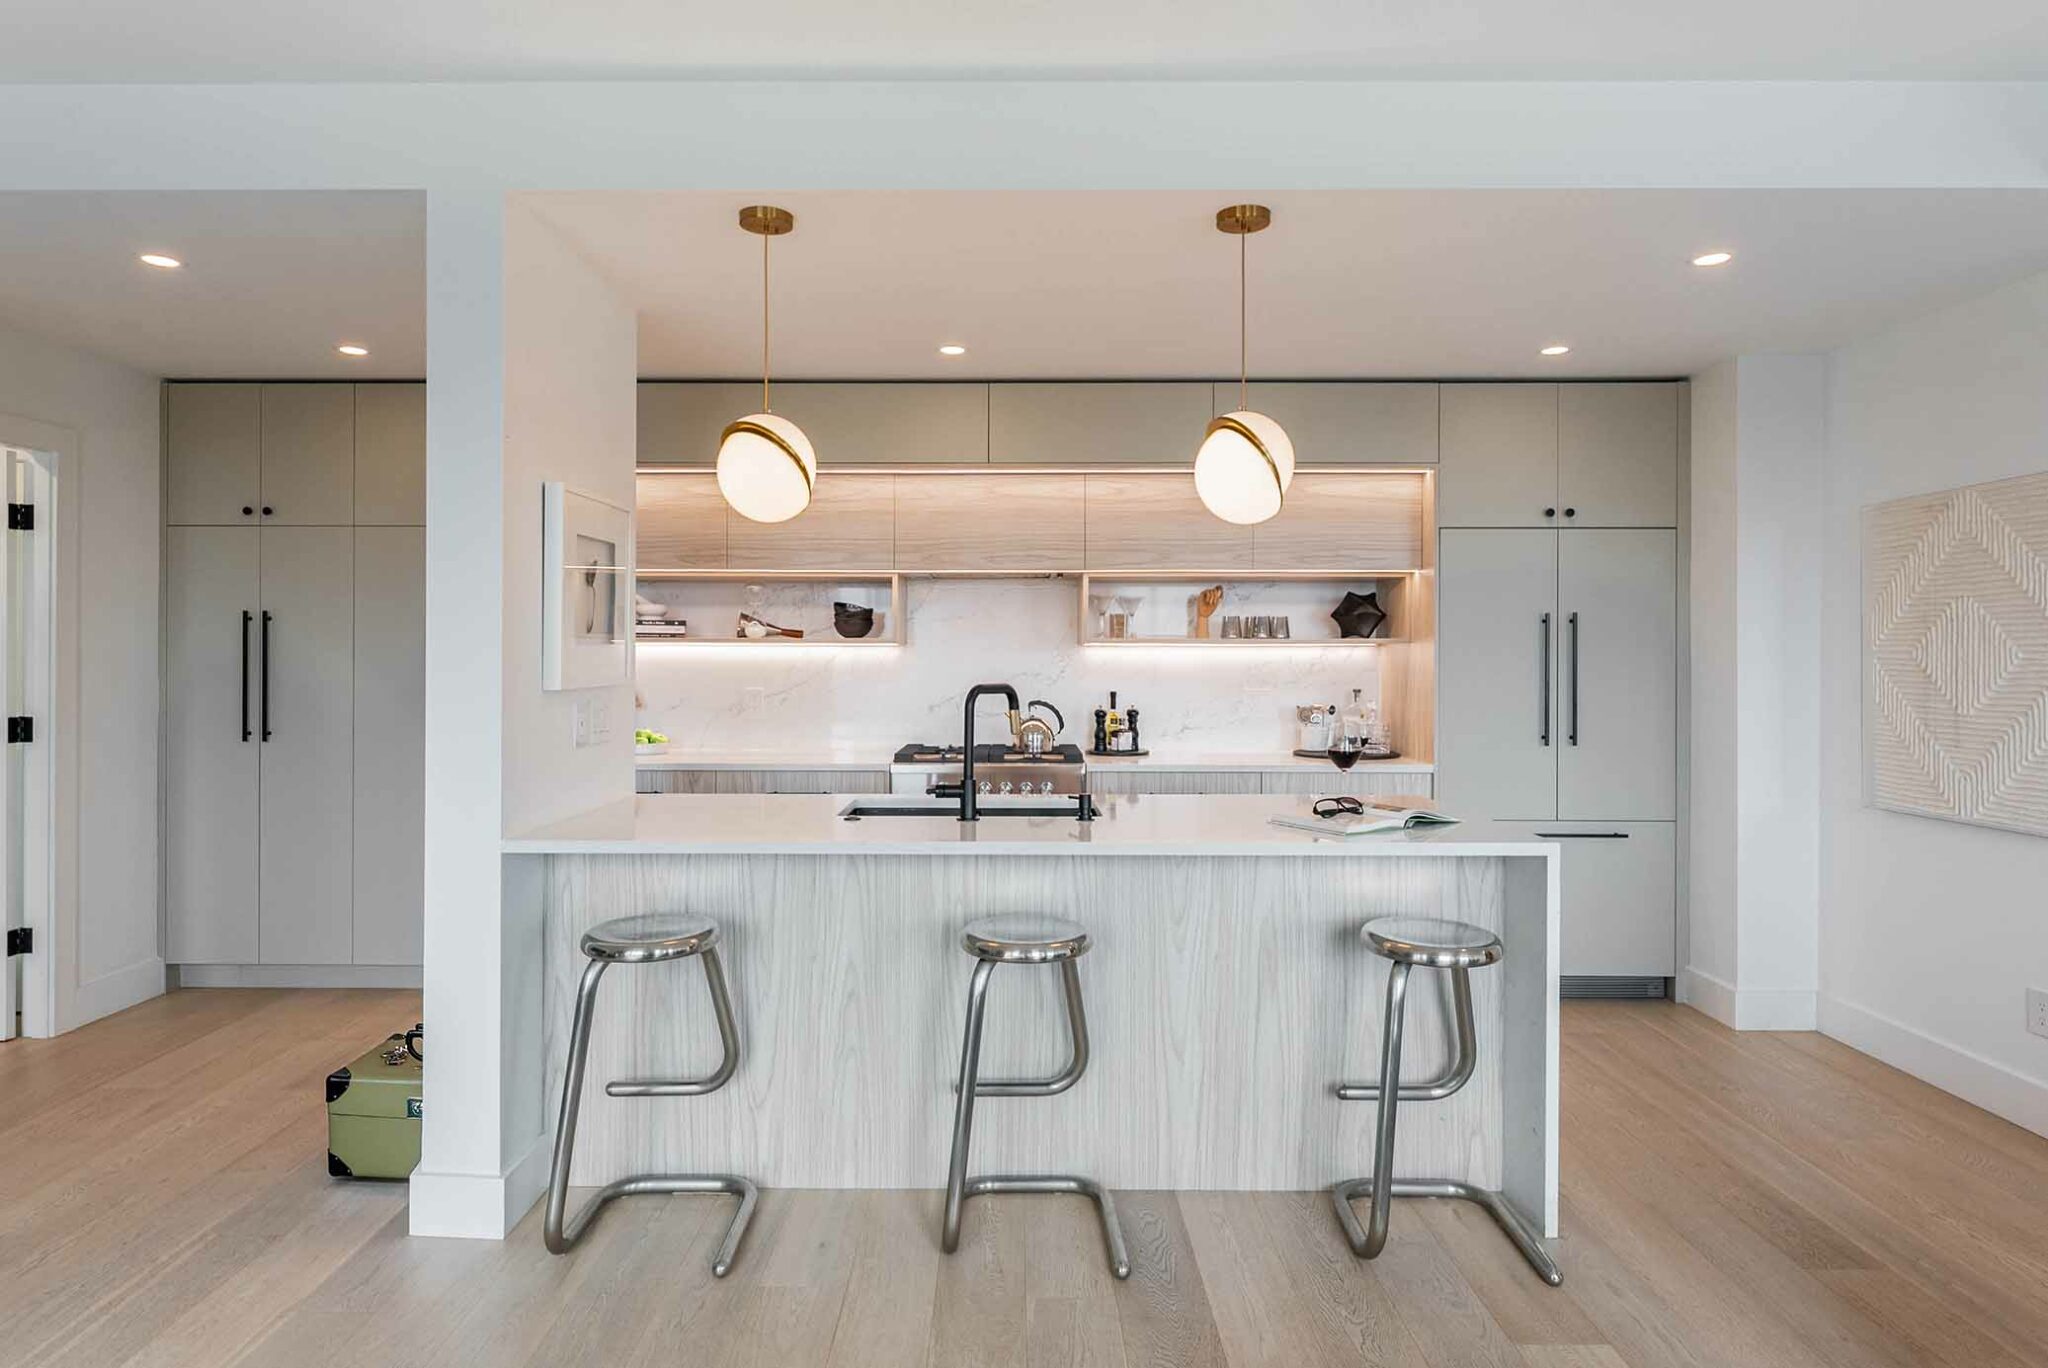 full-kitchen-renovation-vancouver-quartz-countertop-oak-custom-cabinets-bacl-fixtures-under-cabinet-